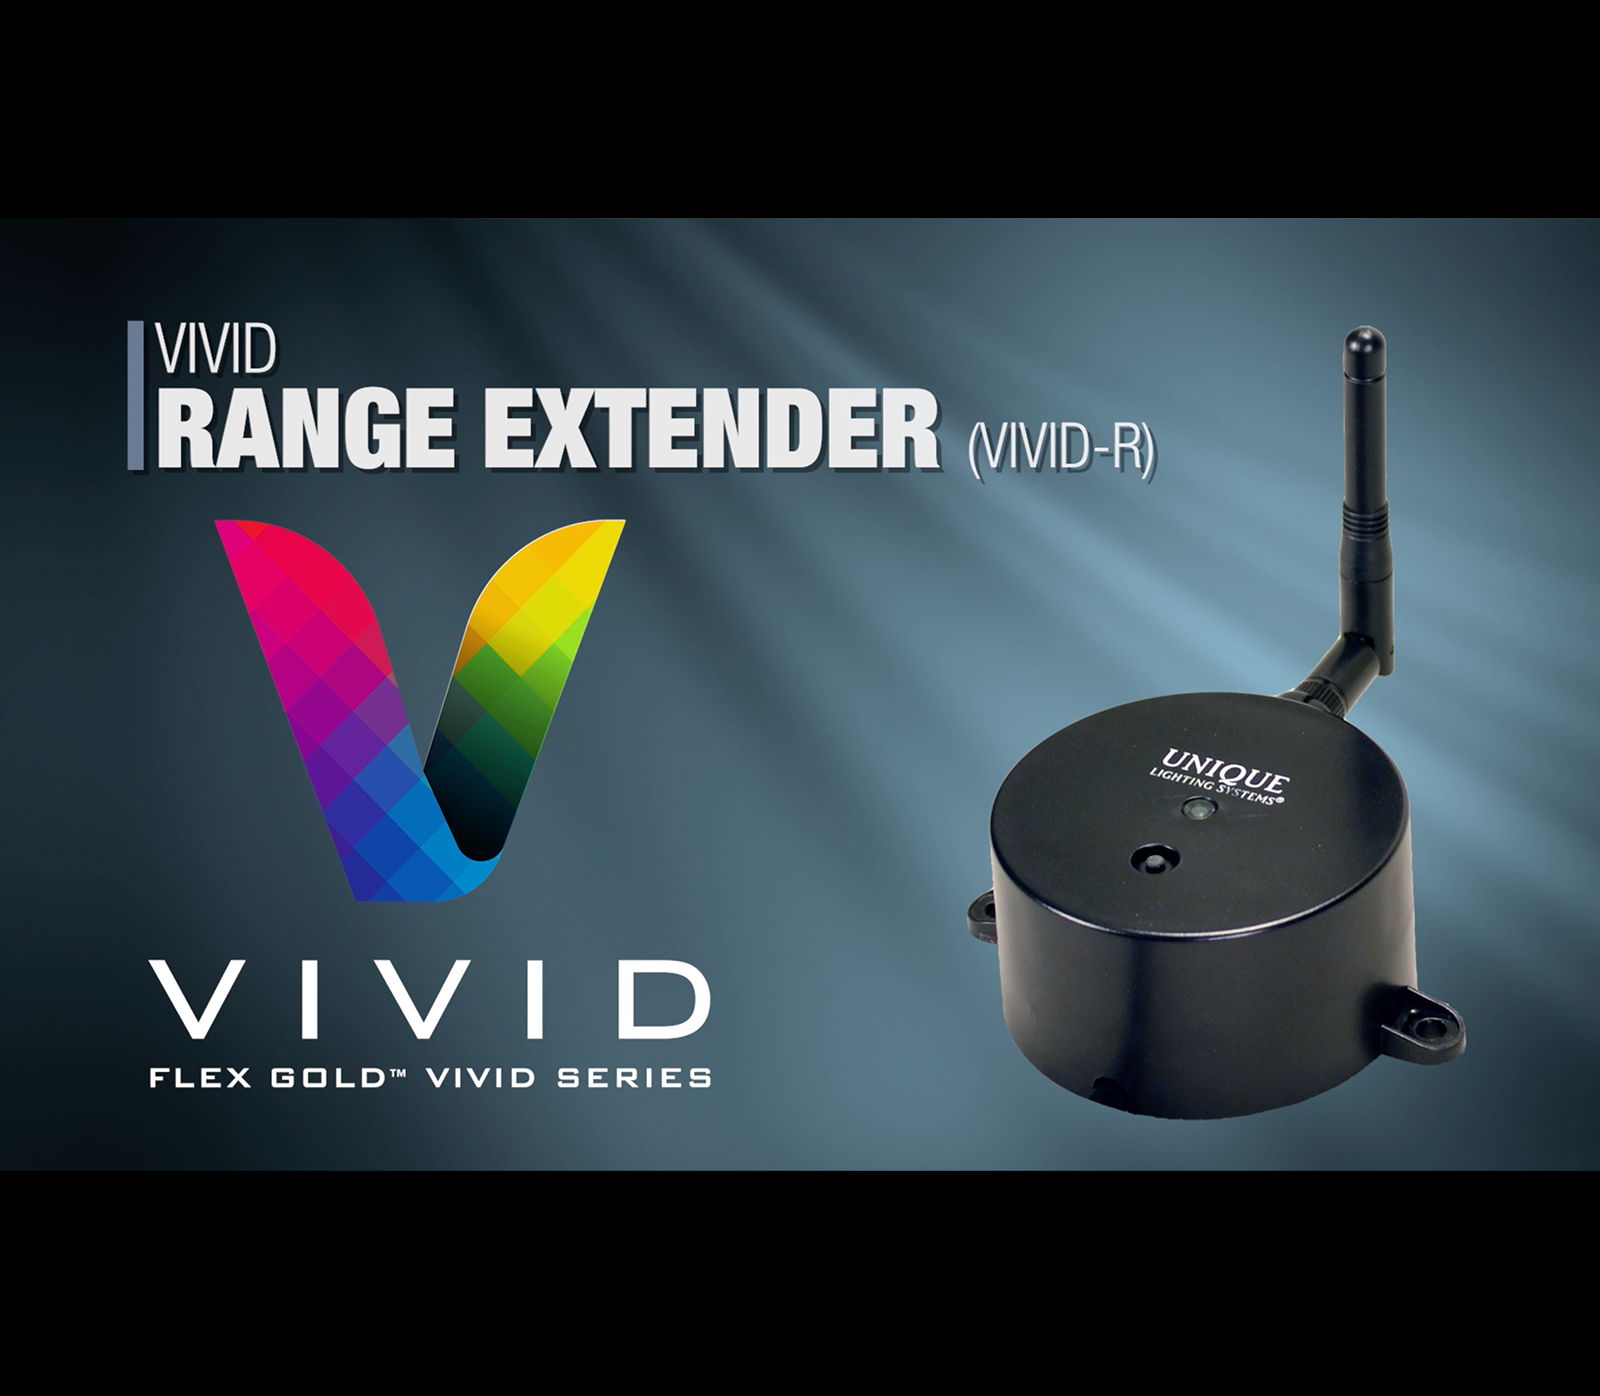 VIVID Range Extender Product Overview